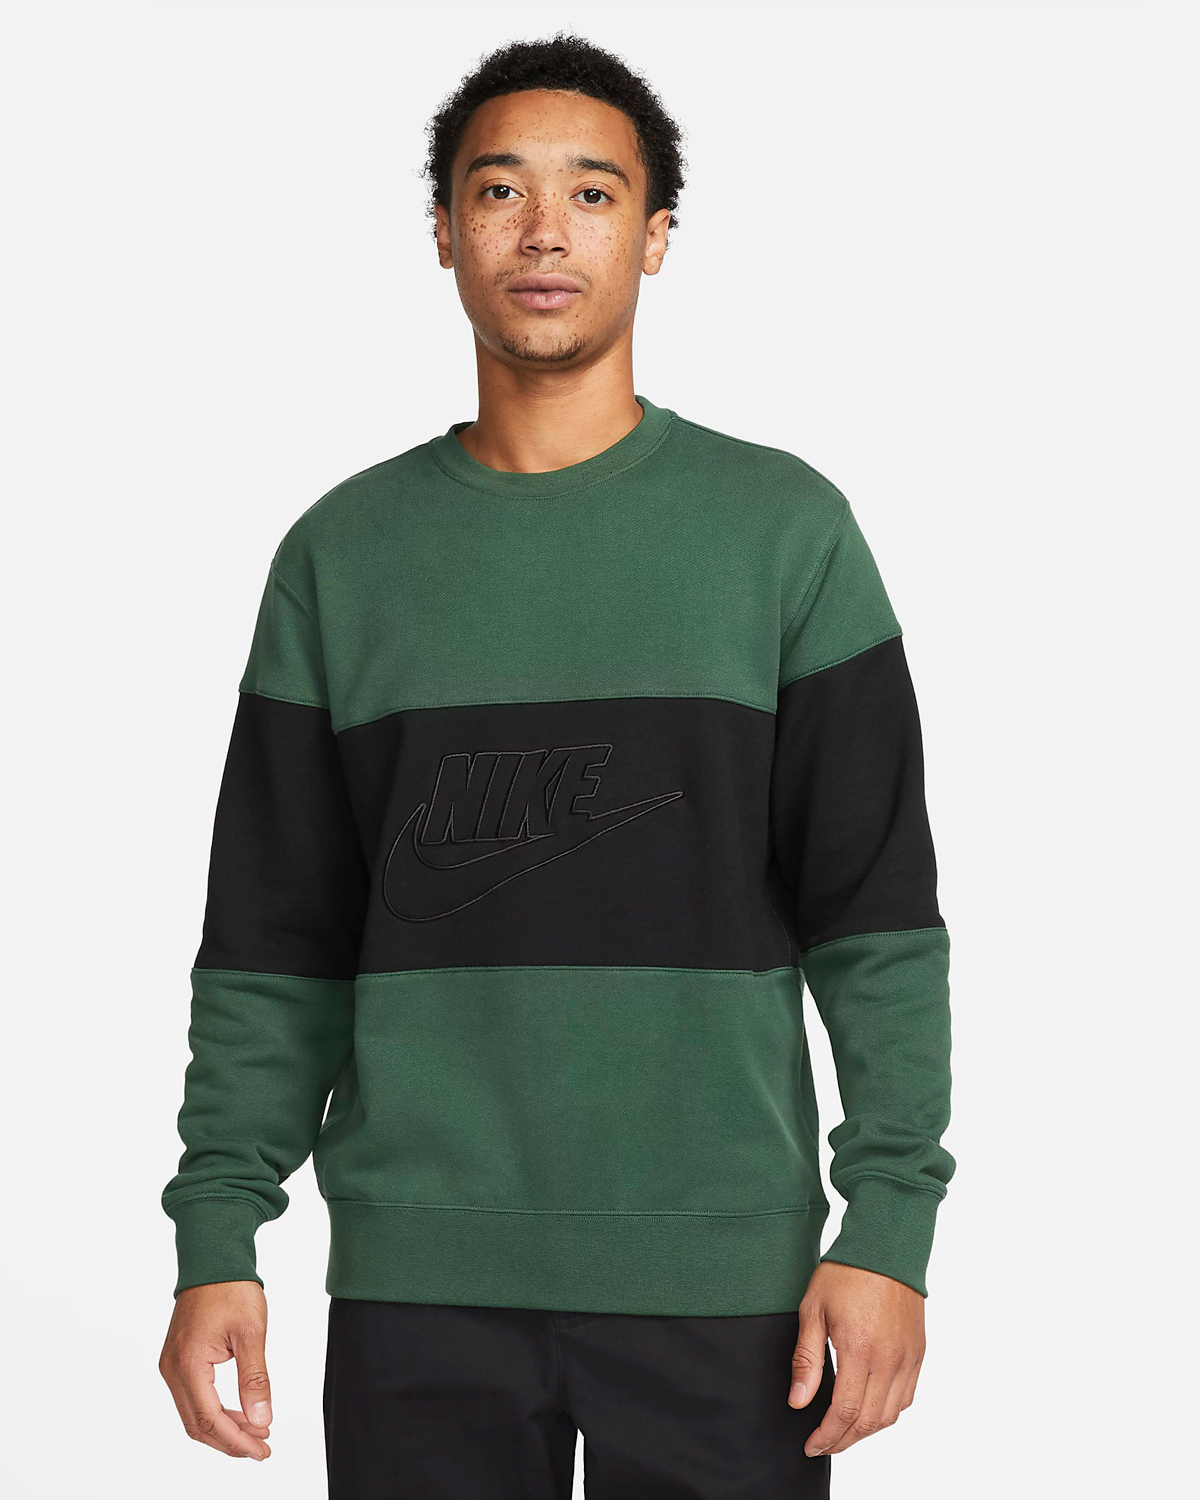 Nike-Club-Color-Blocked-Crew-Sweatshirt-Fir-Green-Black